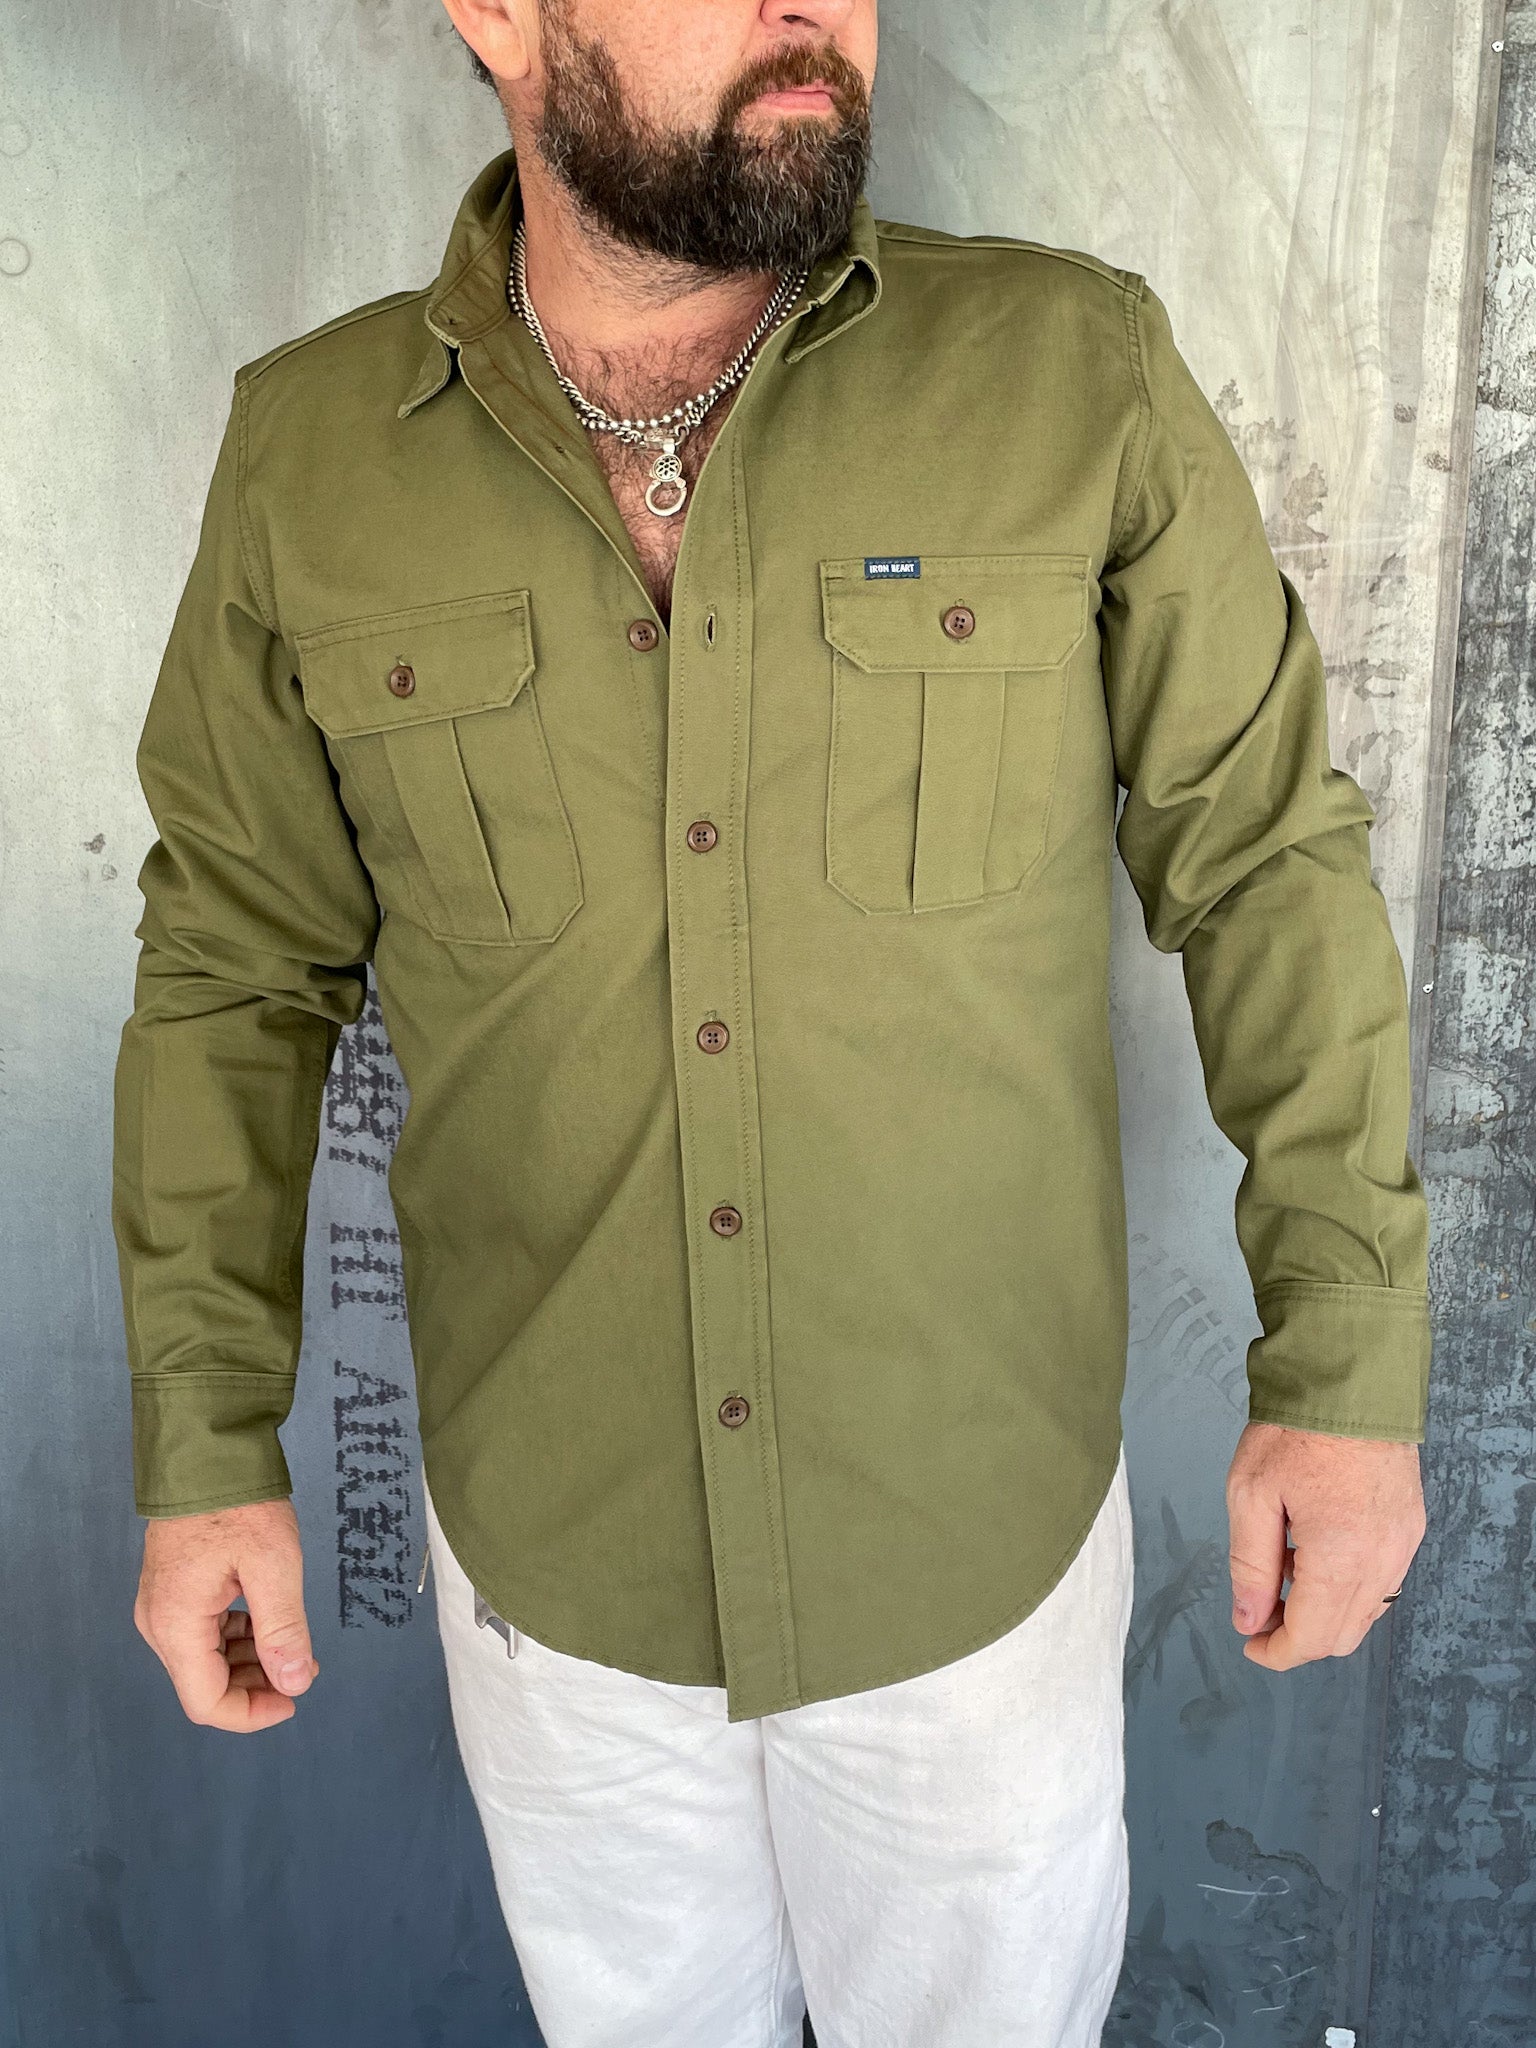 9oz Military Shirt - Olive Drab Green